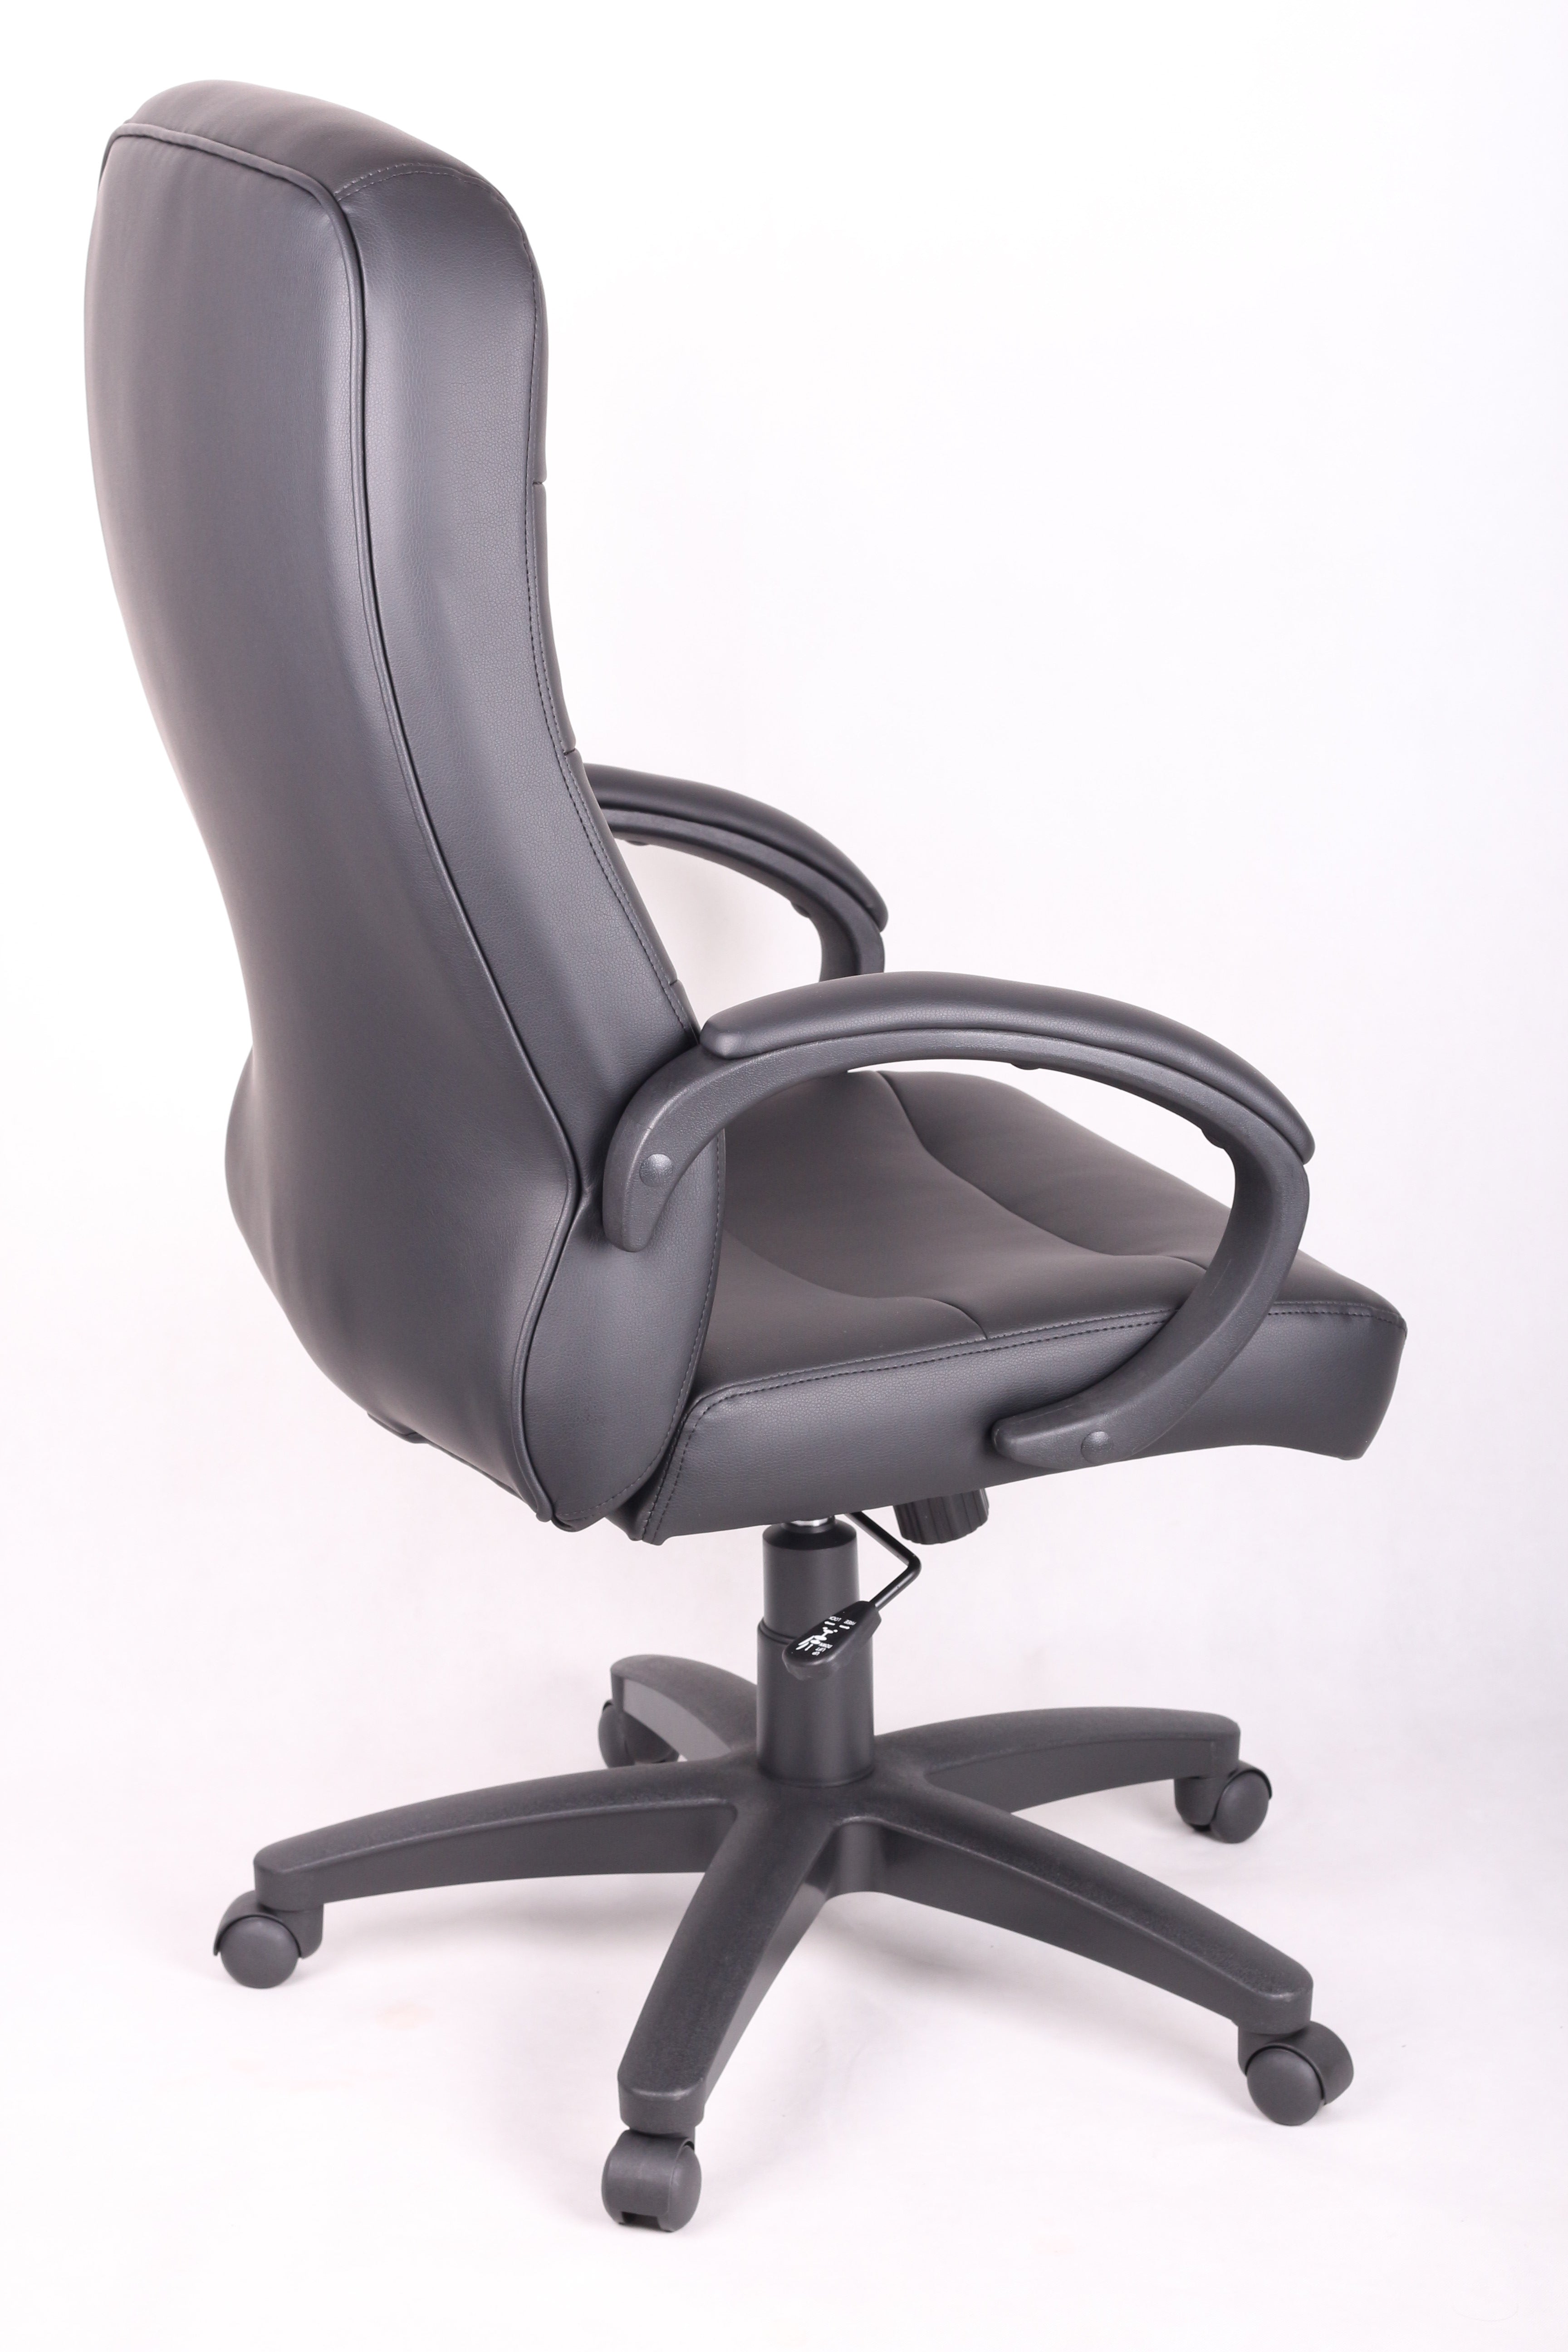 ViscoLogic PRAGMA Ergonomic High-Back Adjustable Swivel Home Office Computer Desk Chair (Black)